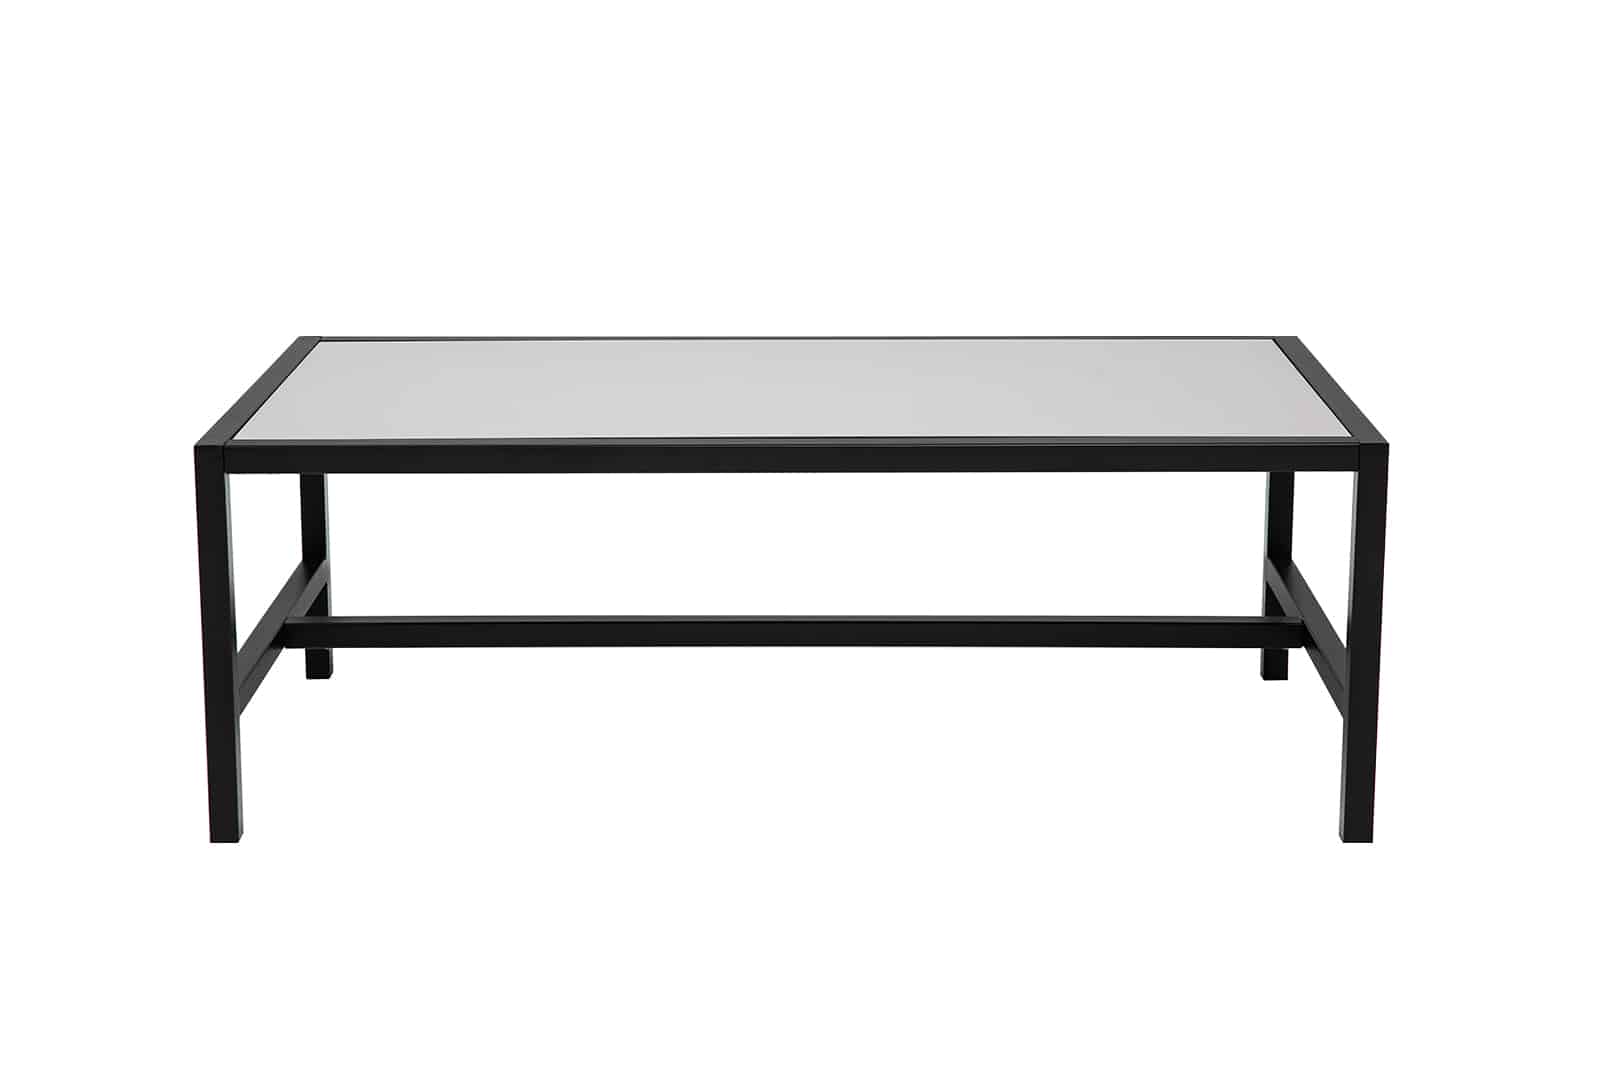 Atlas Rectangular Coffee Table – Black with White Top – 120cmL x 60cmD x 42cmH